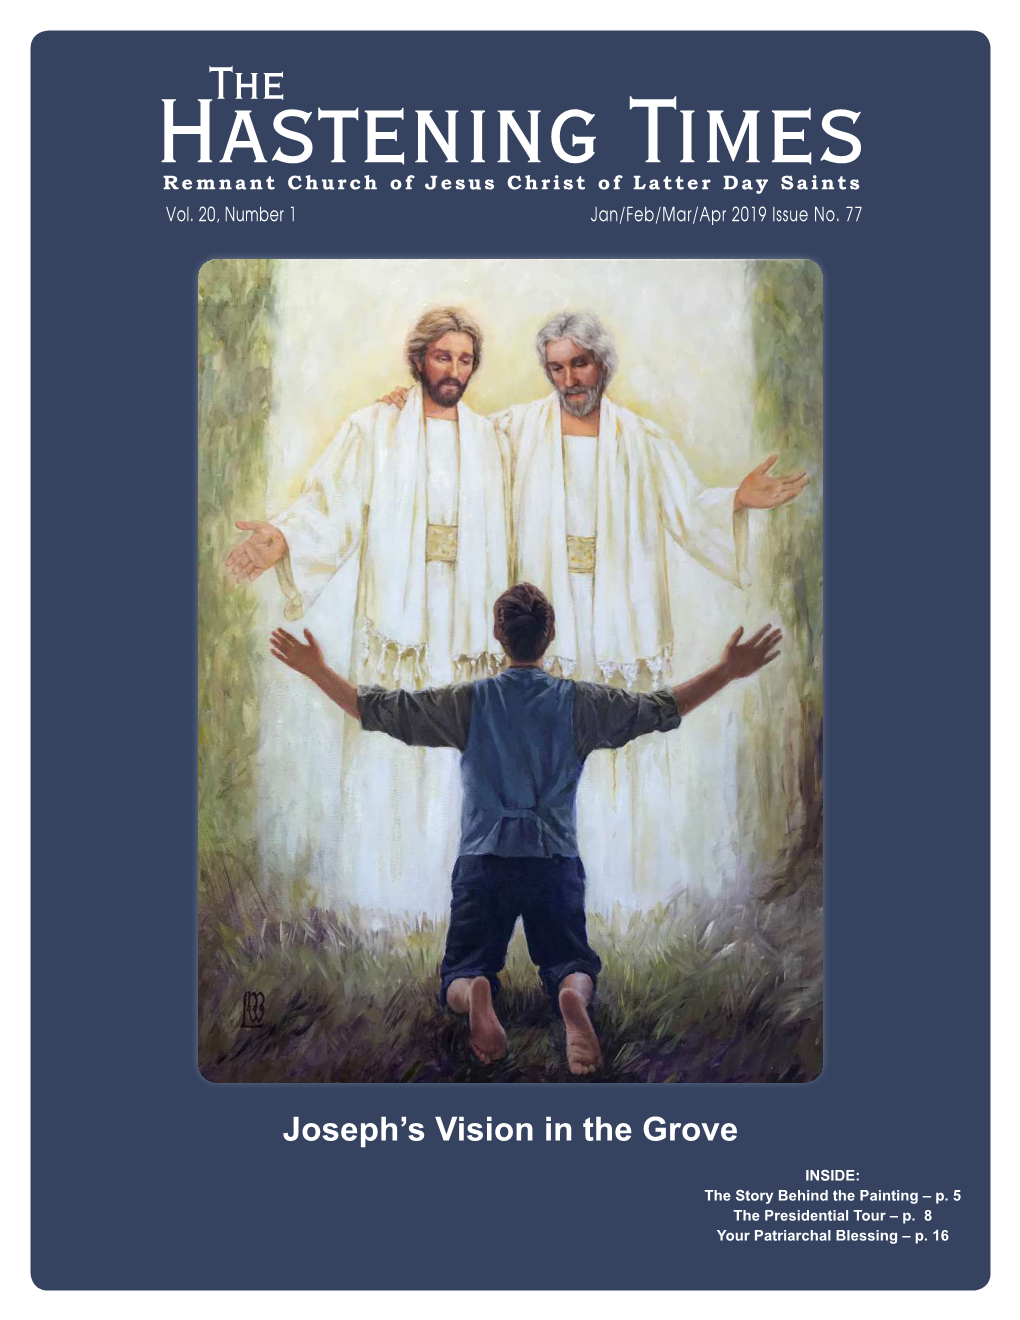 Joseph's Vision in the Grove